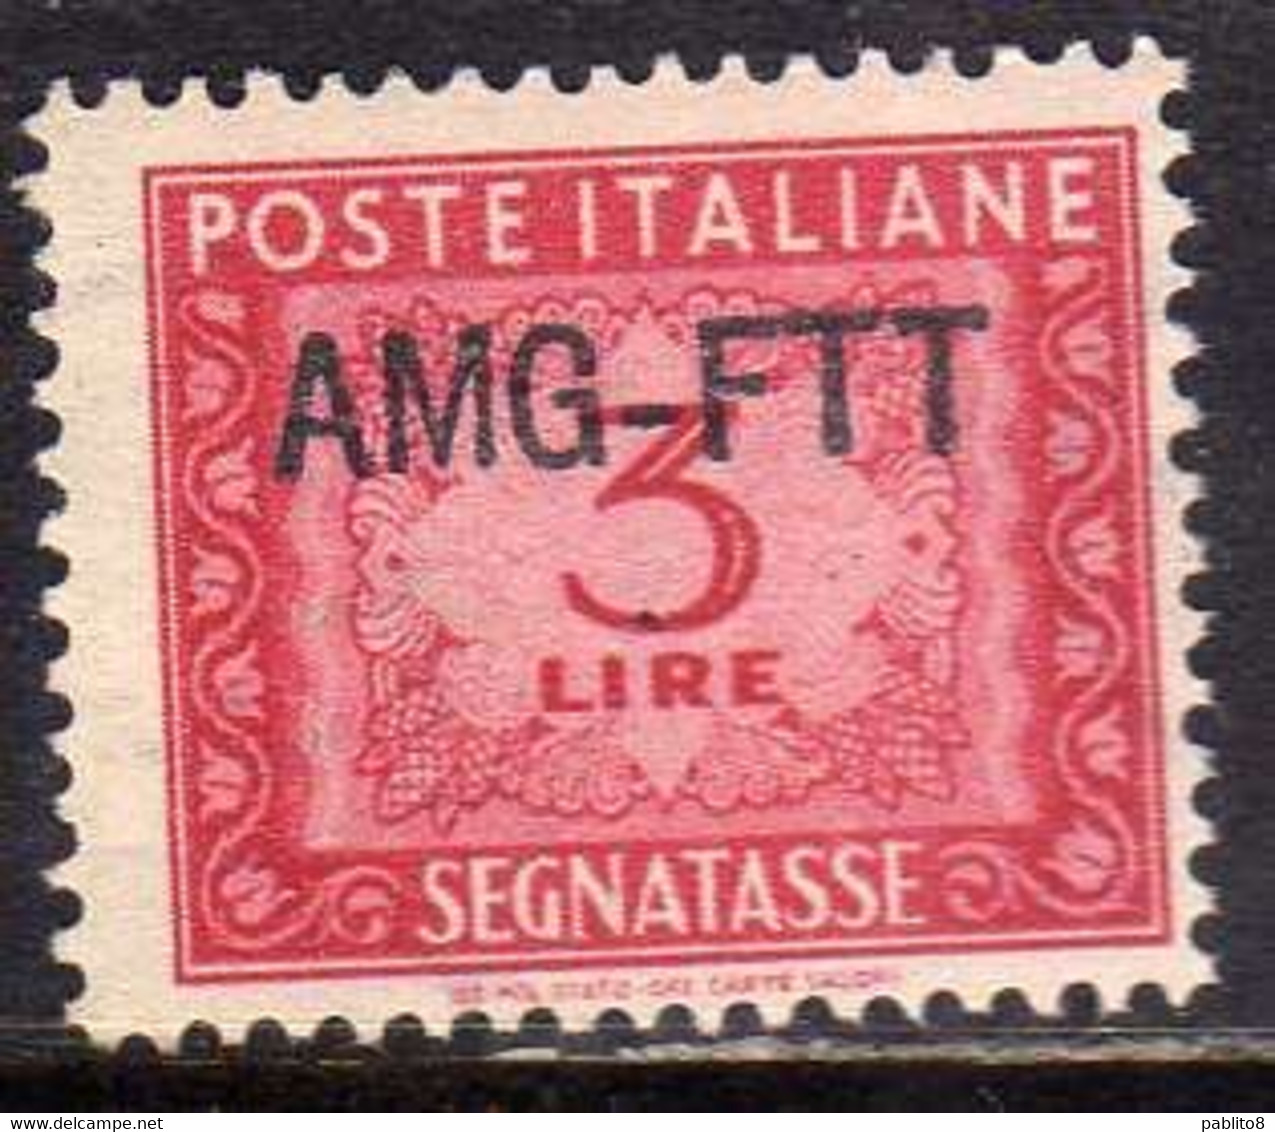 TRIESTE A 1949 1954 AMG-FTT SOPRASTAMPATO D'ITALIA ITALY OVERPRINTED SEGNATASSE POSTAGE DUE TAXES TASSE LIRE 3 MNH - Segnatasse